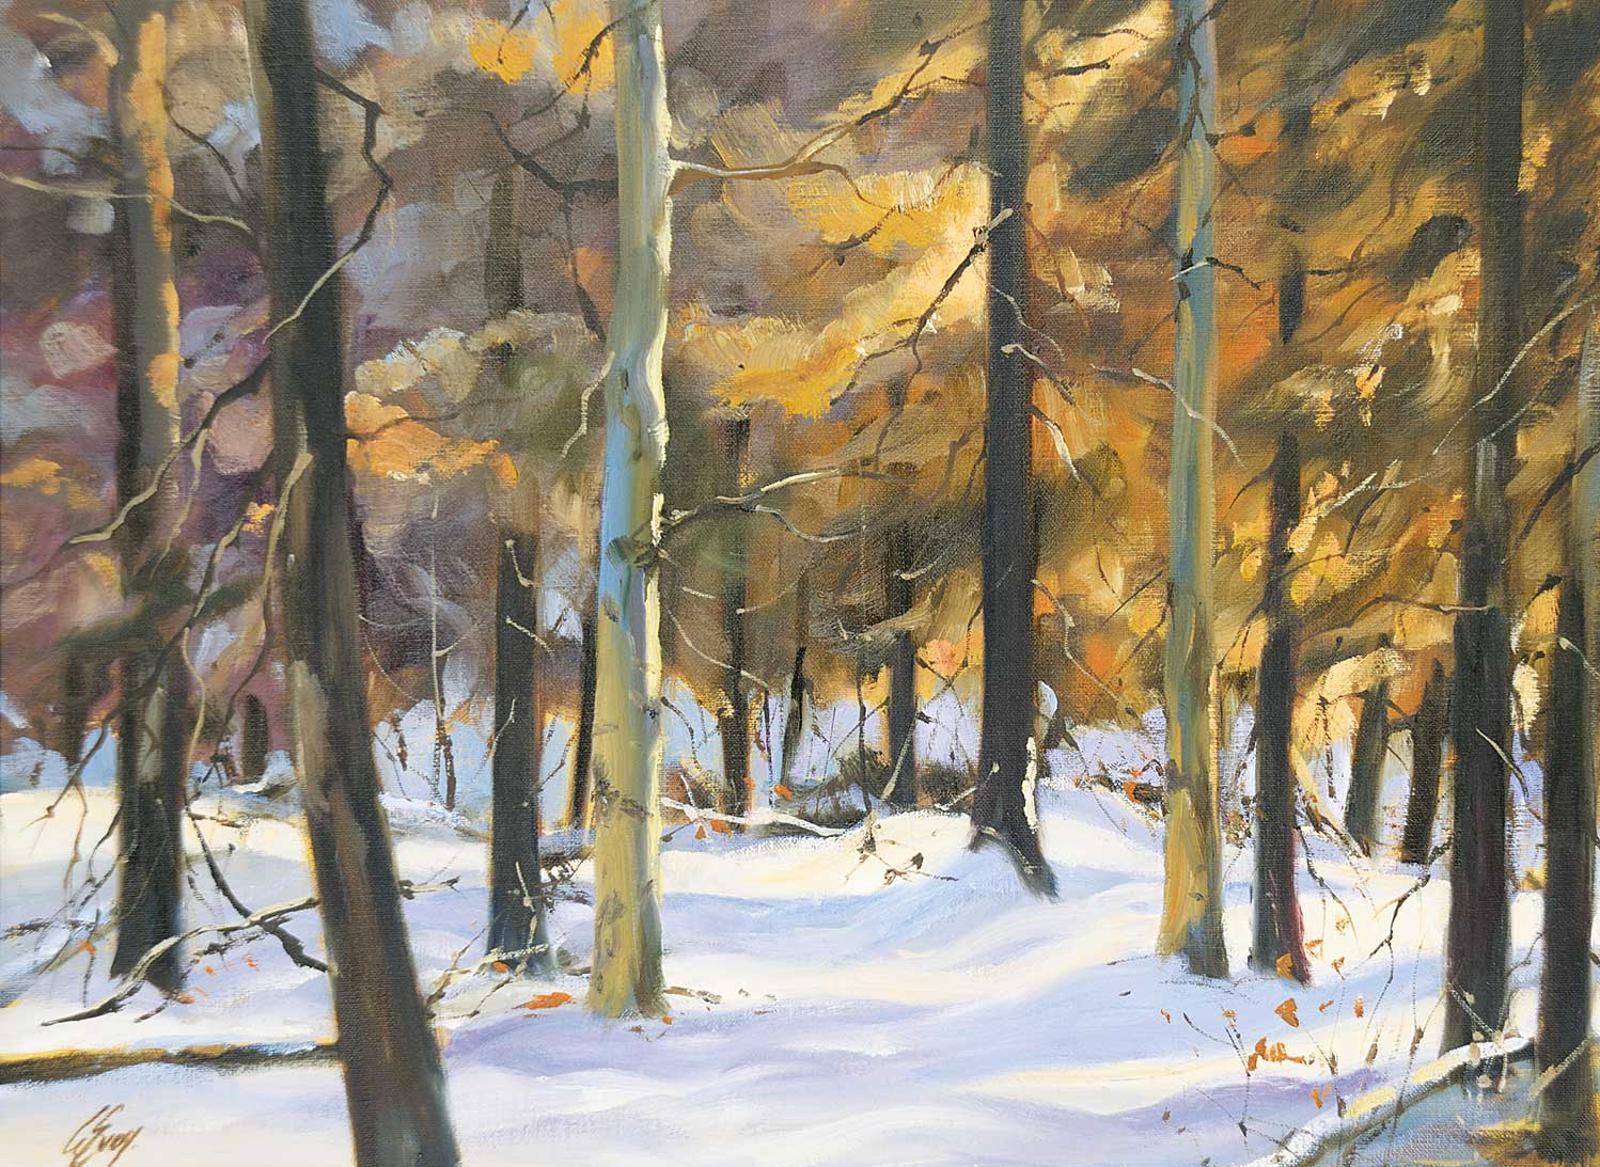 George Arthur [Art] Evoy - Winter Woods